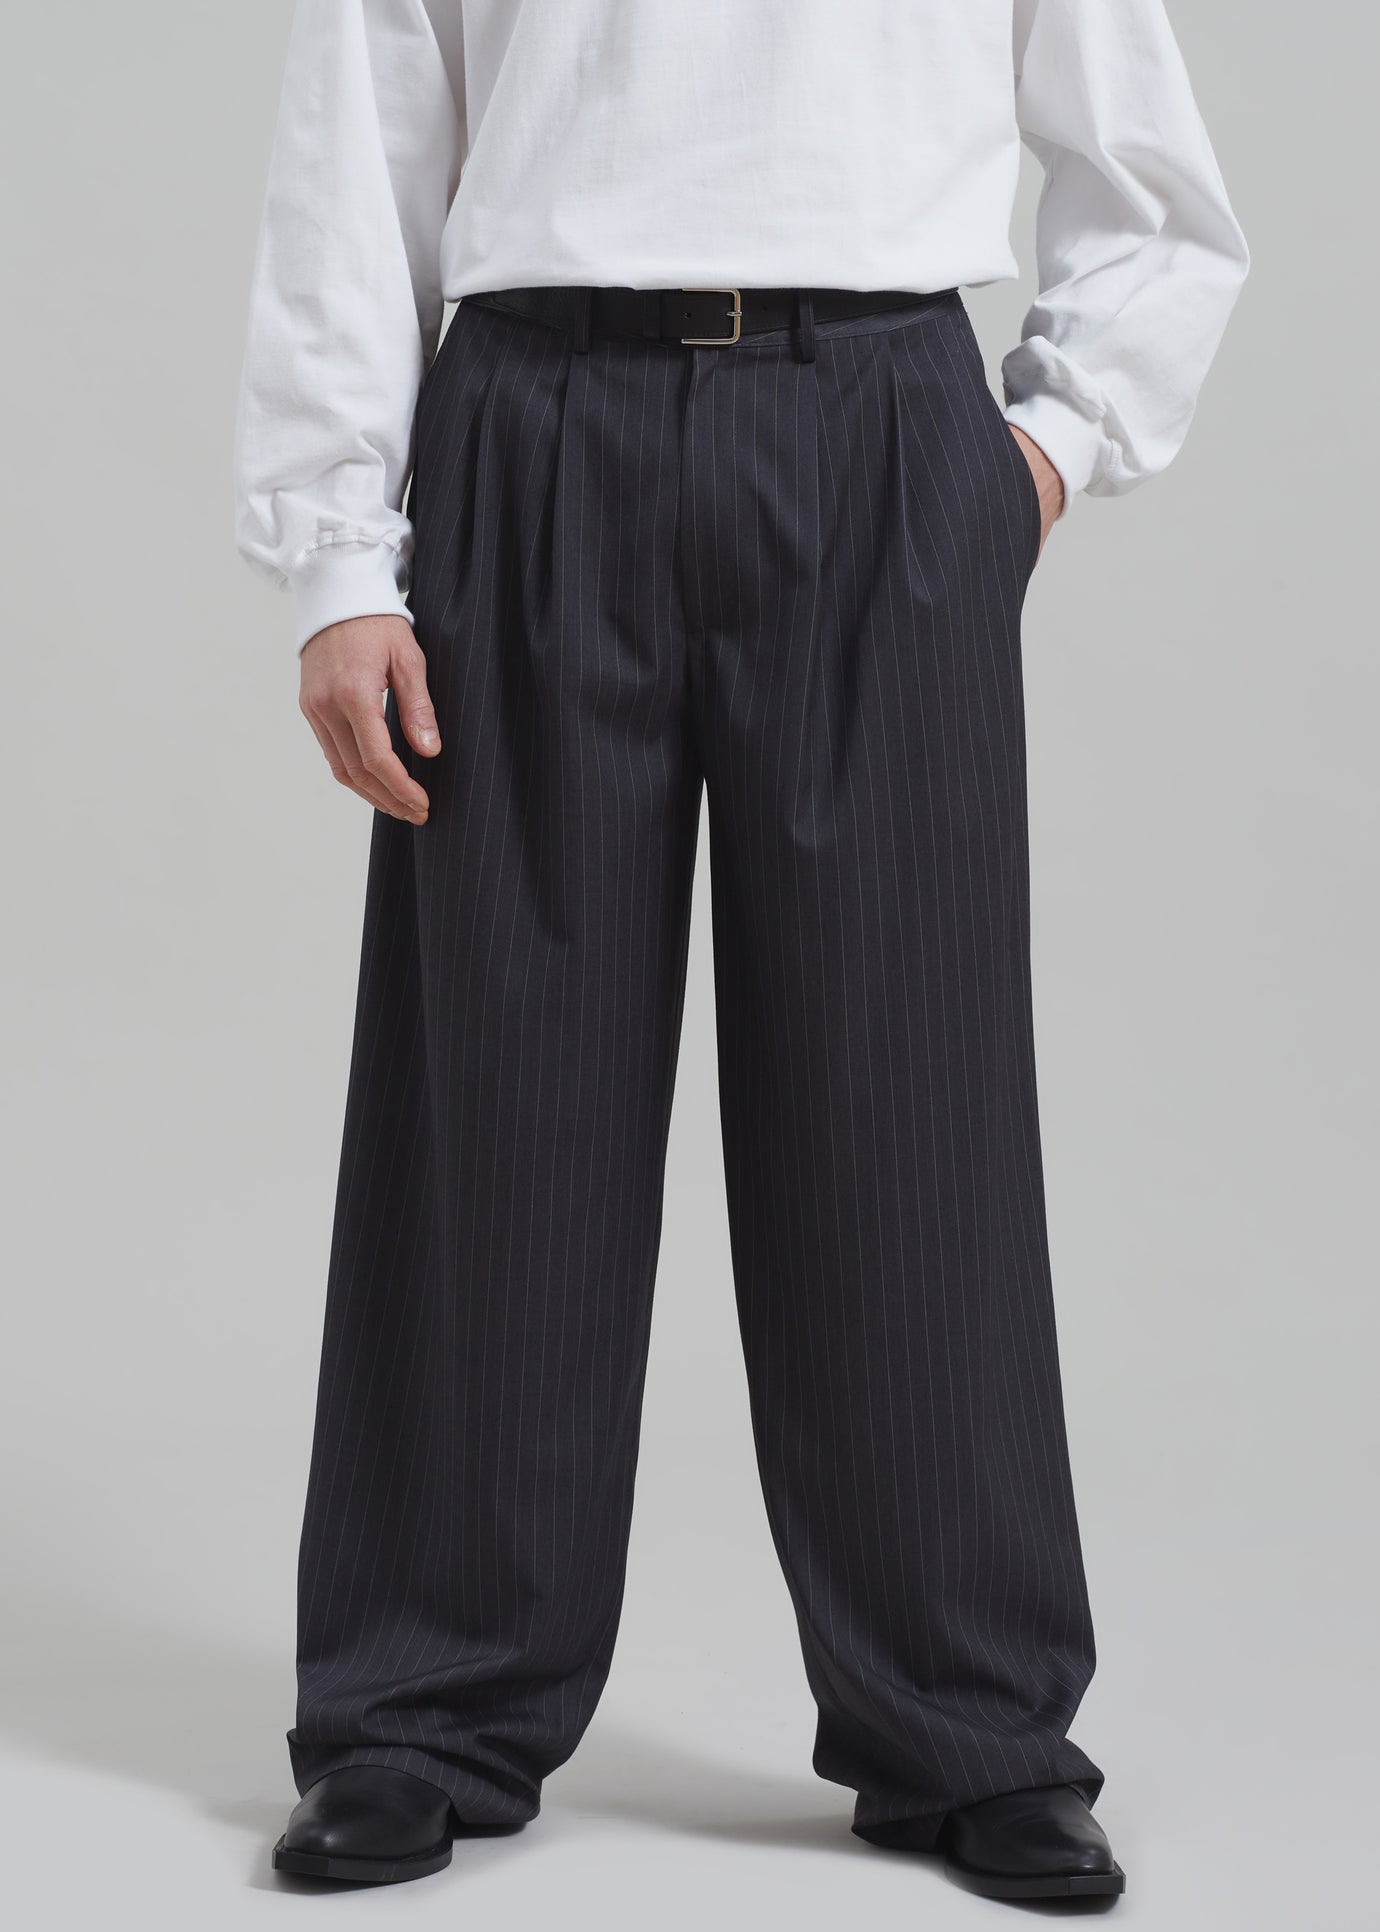 Peyton Pleated Pants - Grey Pinstripe - 1